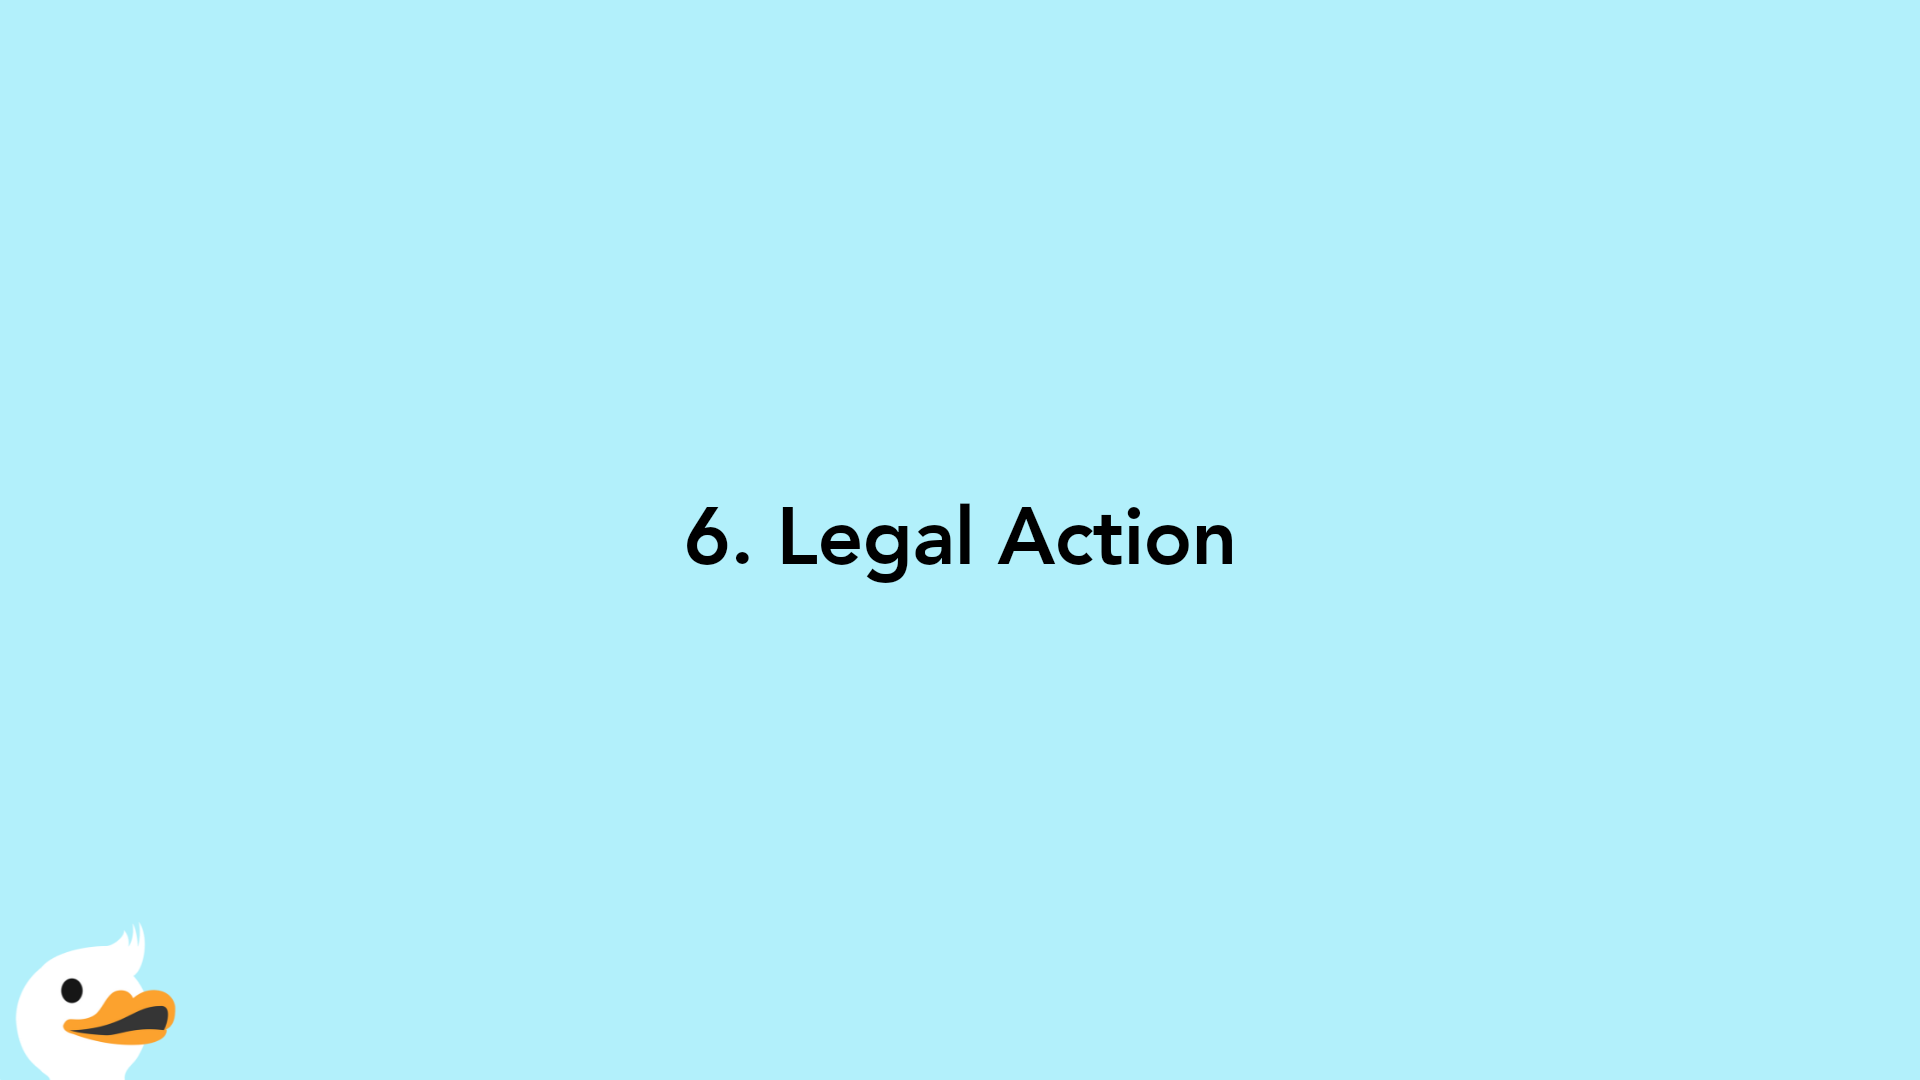 6. Legal Action